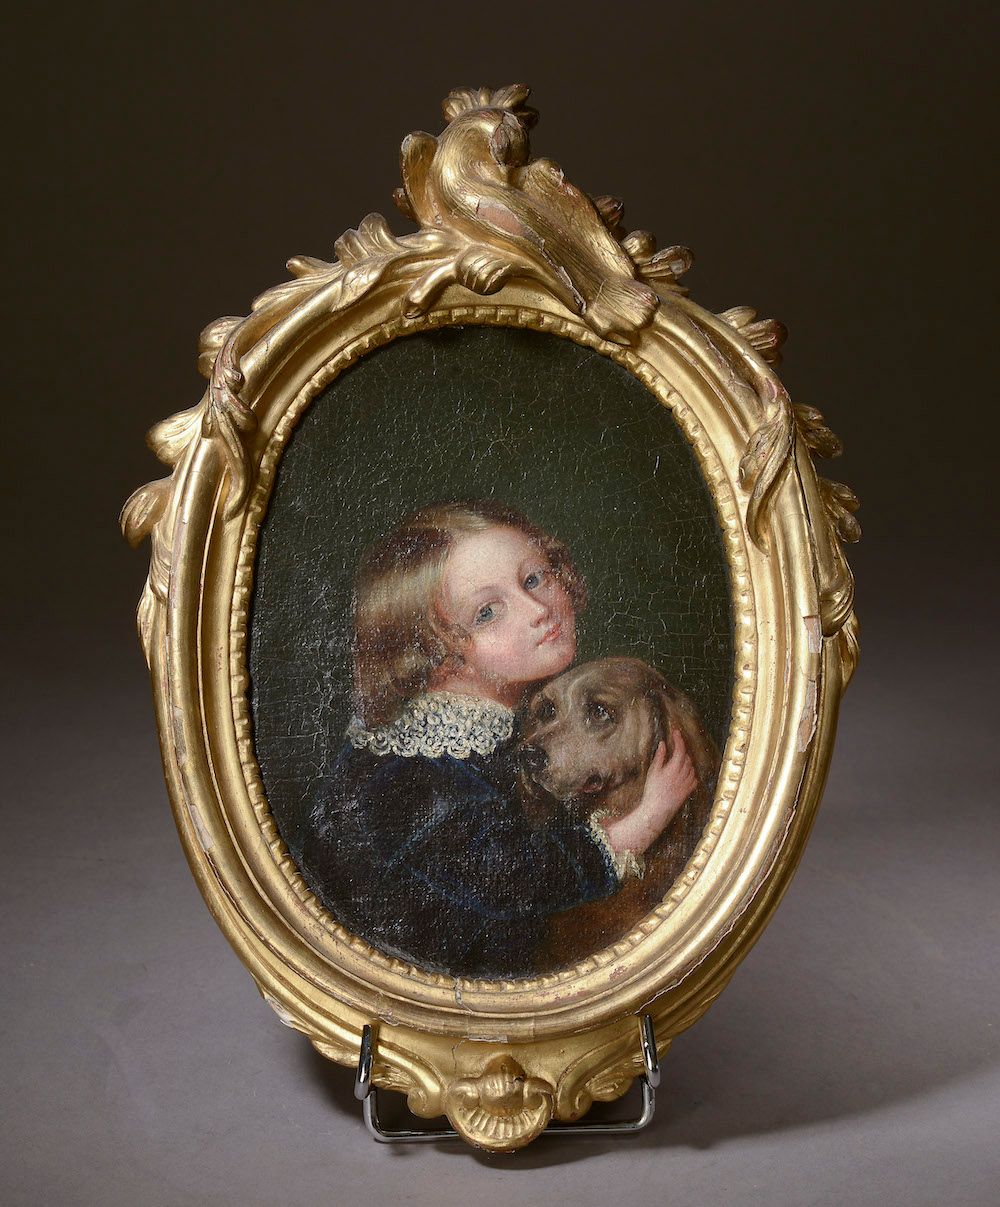 Null 19世纪中期的法国学校，可能是卡斯特拉夫人的作品。

Aimery de La Rochefoucauld小时候的肖像。

椭圆形画布上的油画，位于佛&hellip;